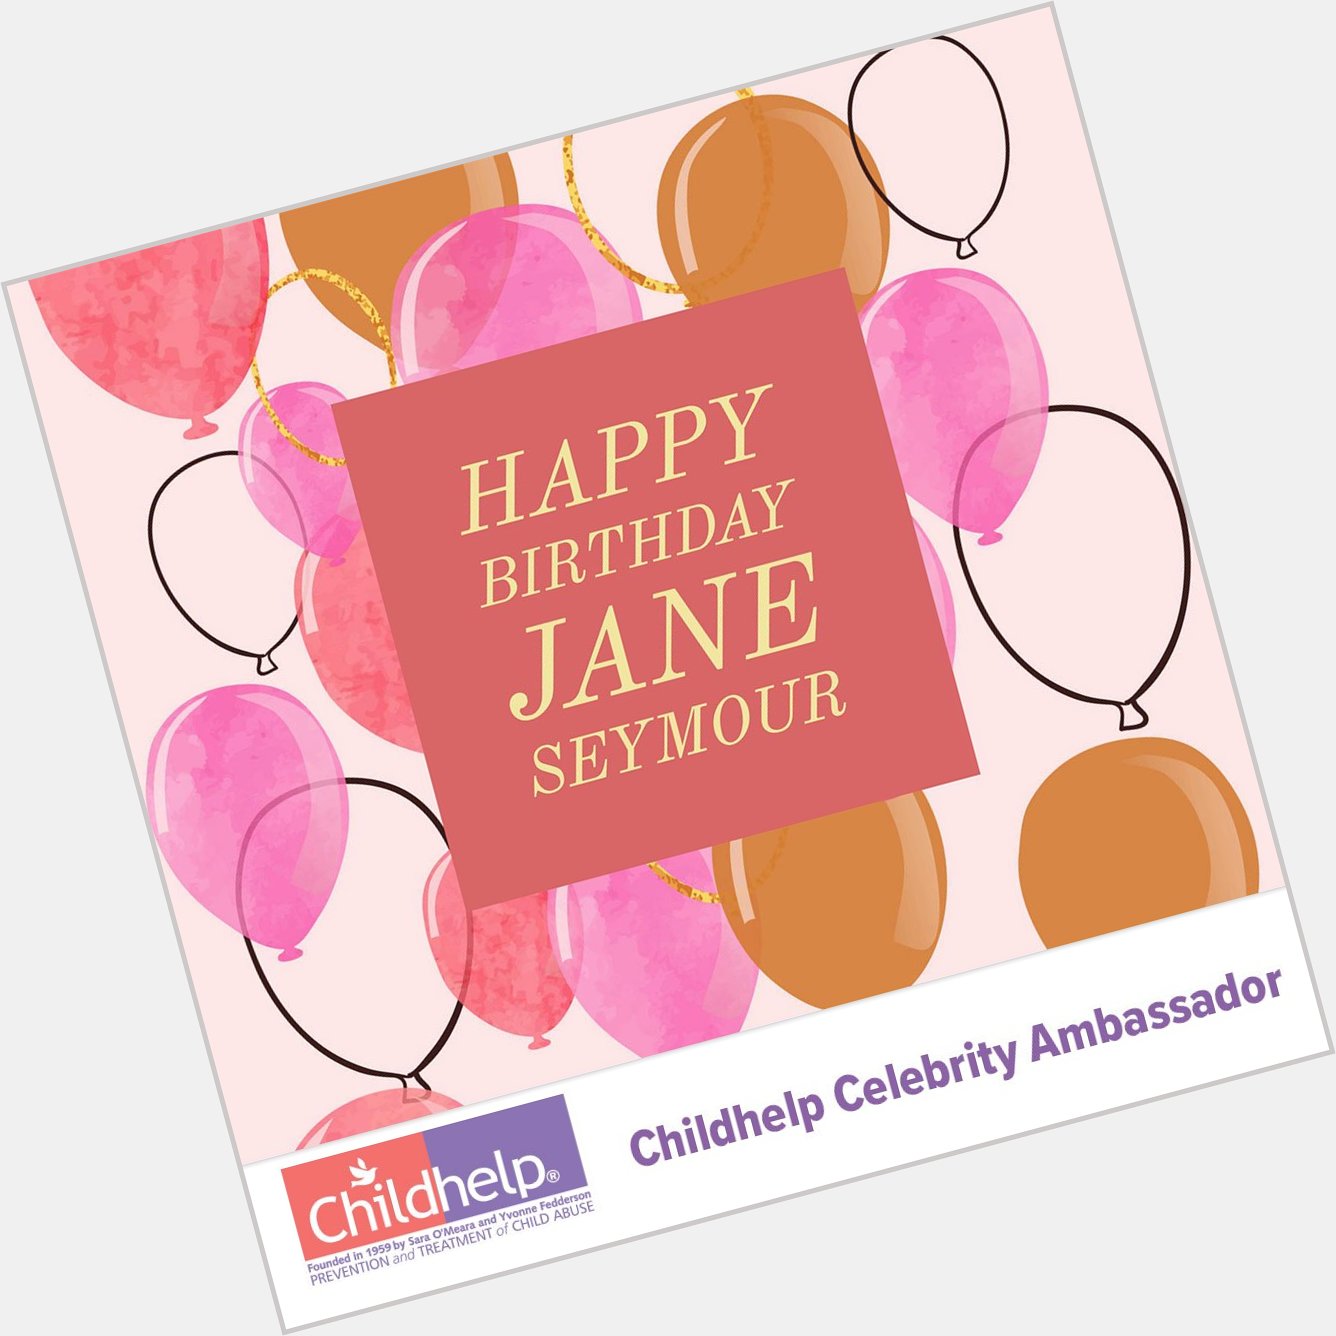 Happy Birthday to Childhelp Celebrity Ambassador Jane Seymour! 